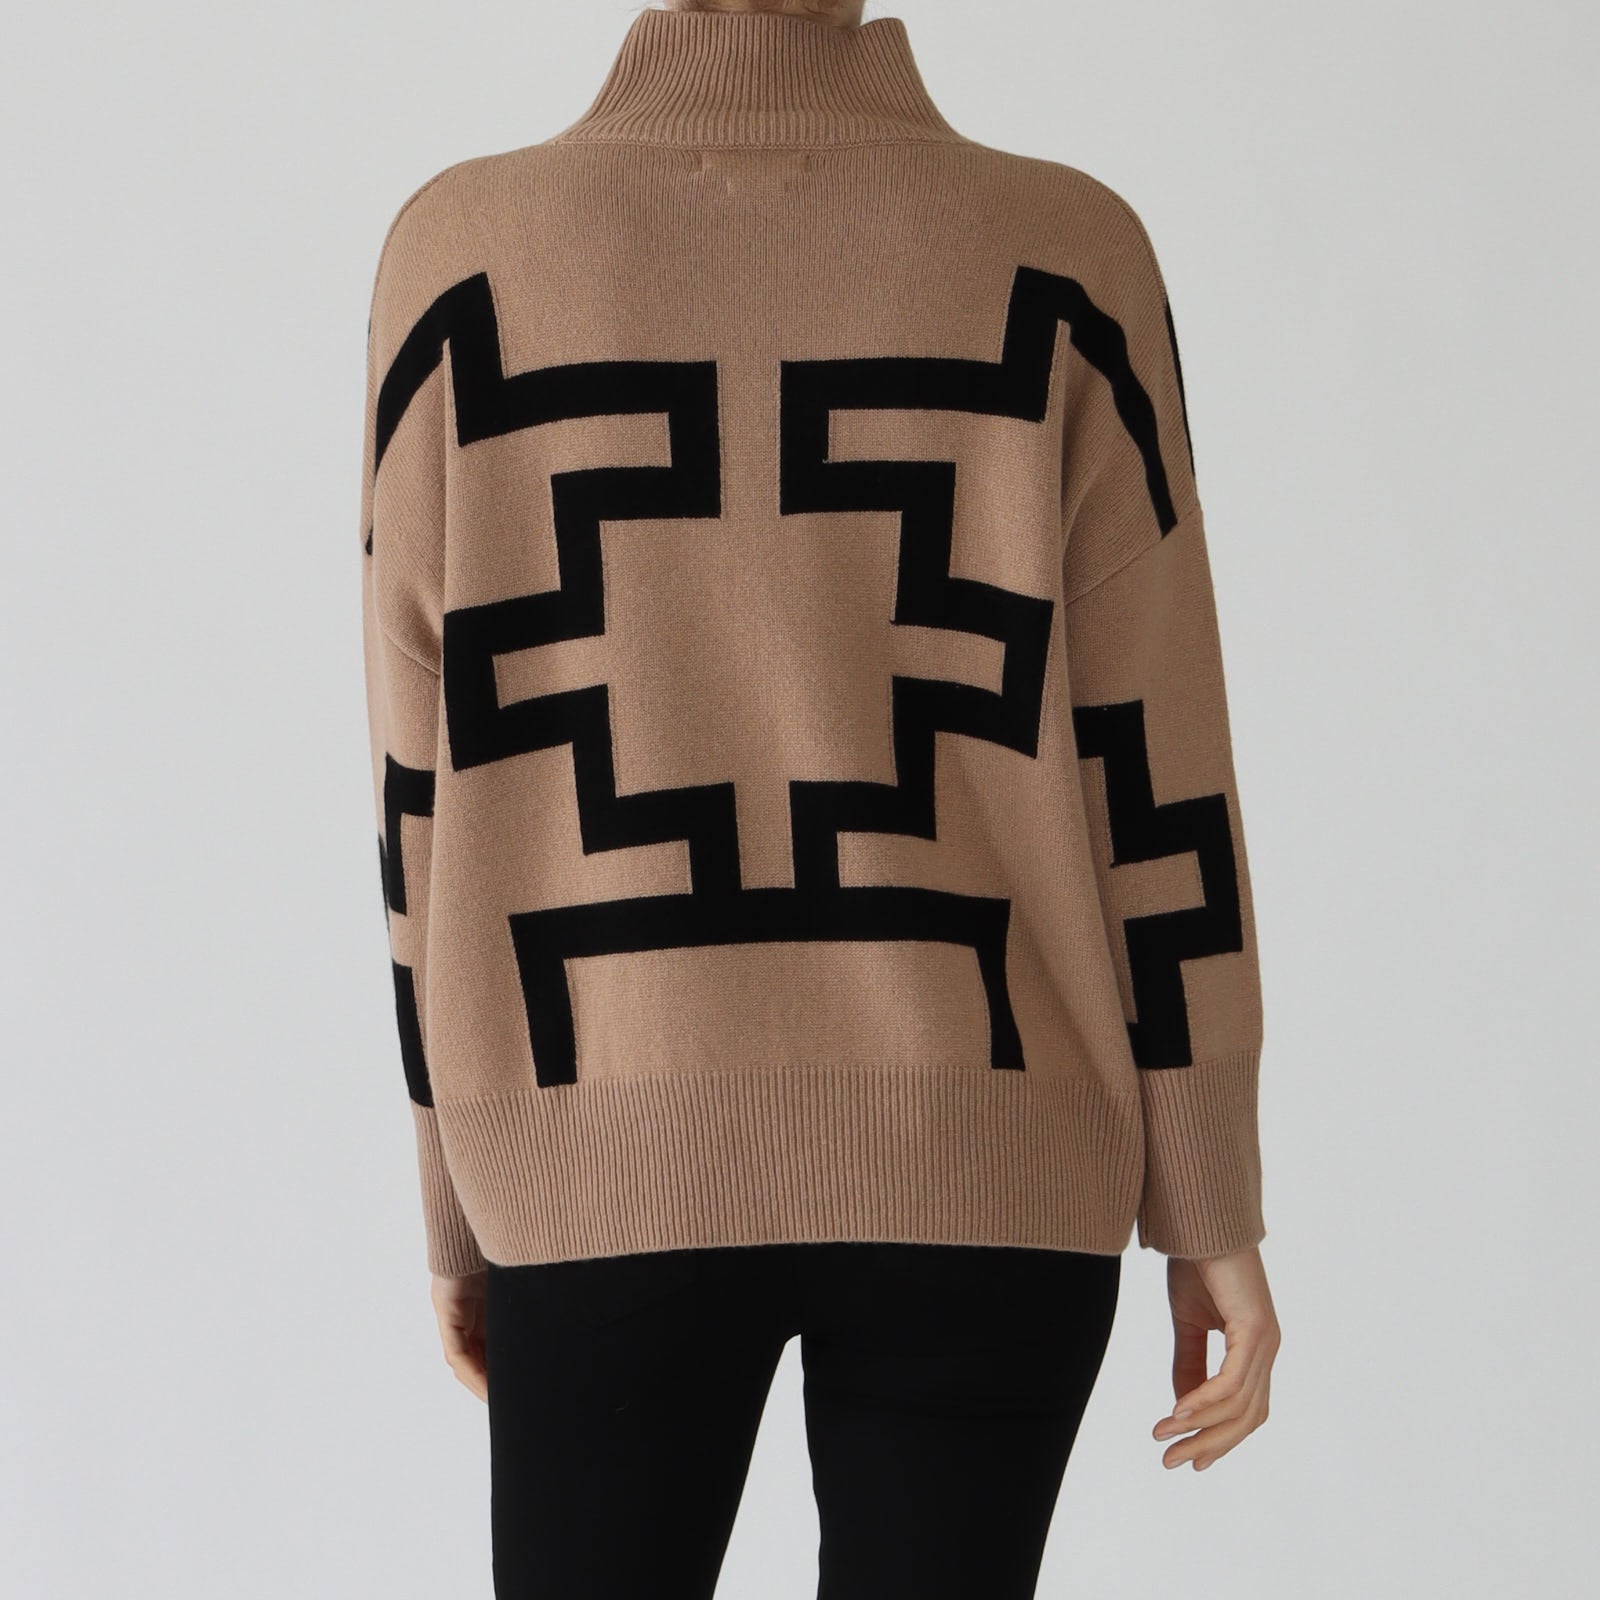 Iwar Fauve & Noir Cashmere Blend Sweater